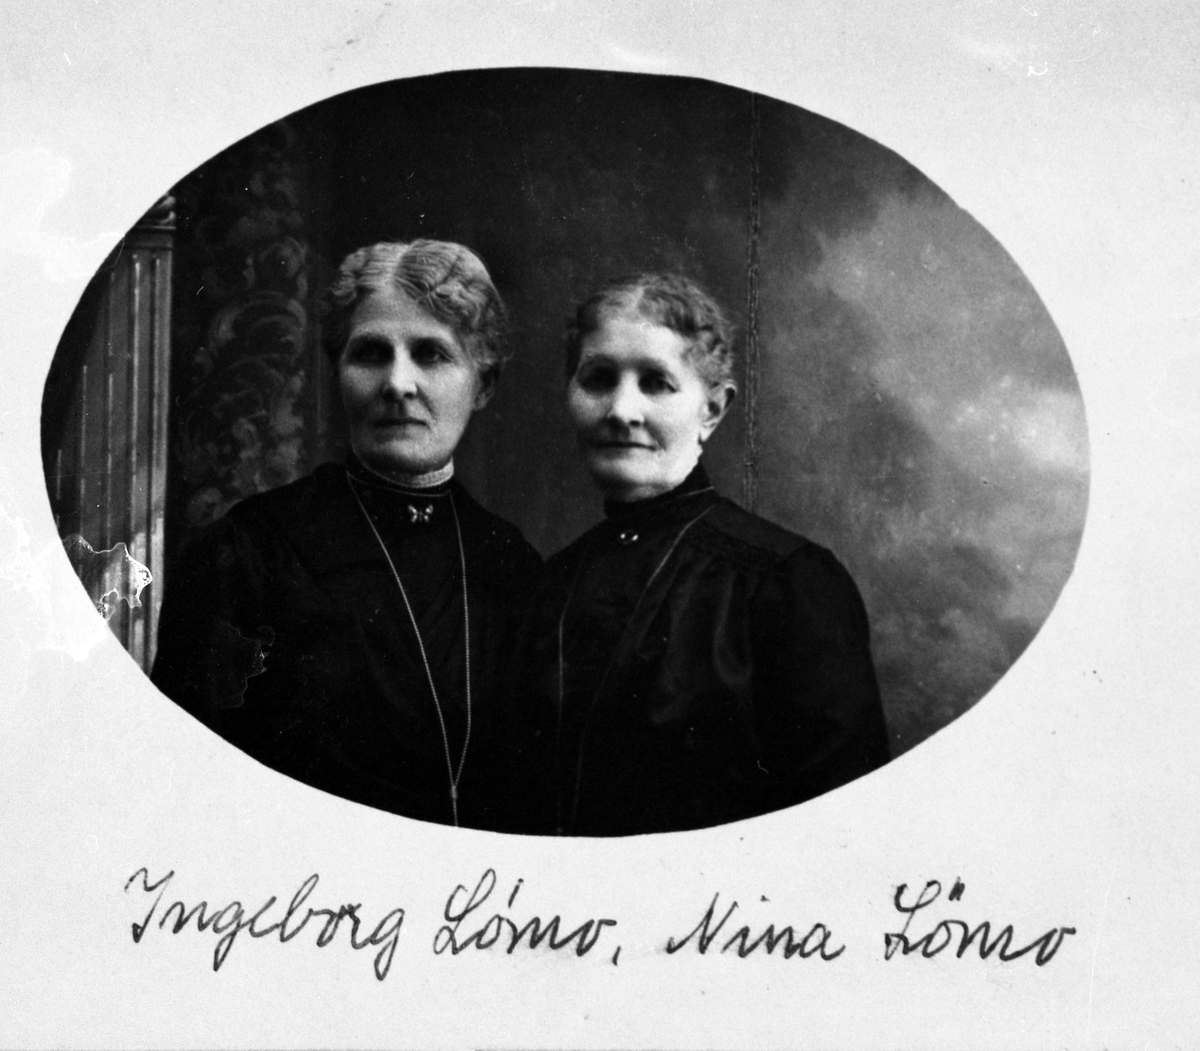 Søstrene Lømo, Ingeborg og Nina. Fotografer i Elverum ca 1900-1920.